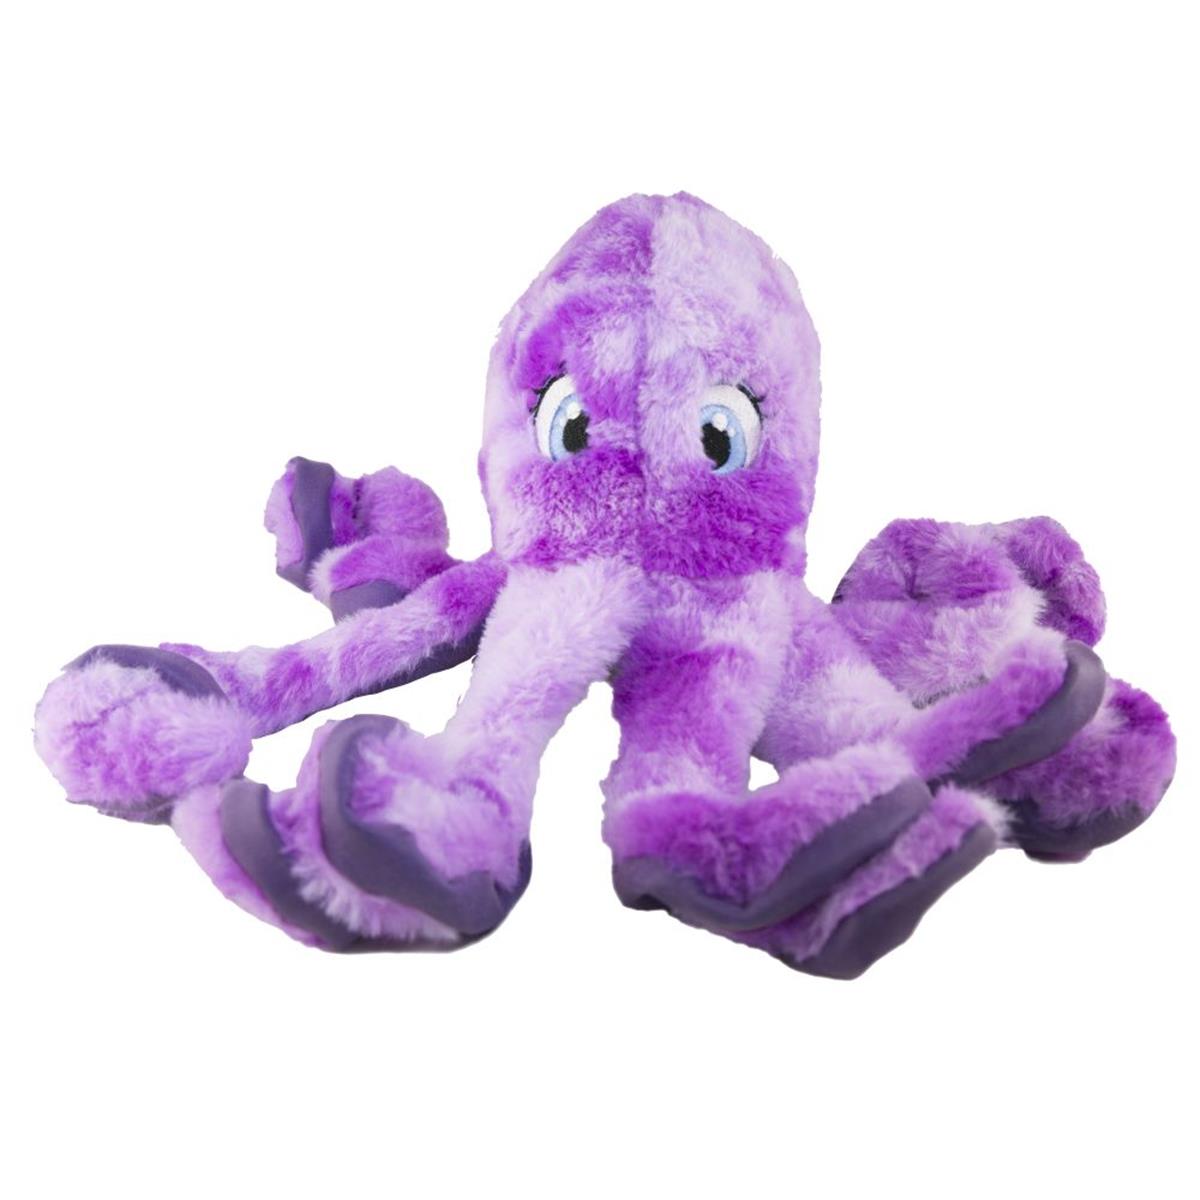 Kc36097 Softseas Octopus Dog Toys Small